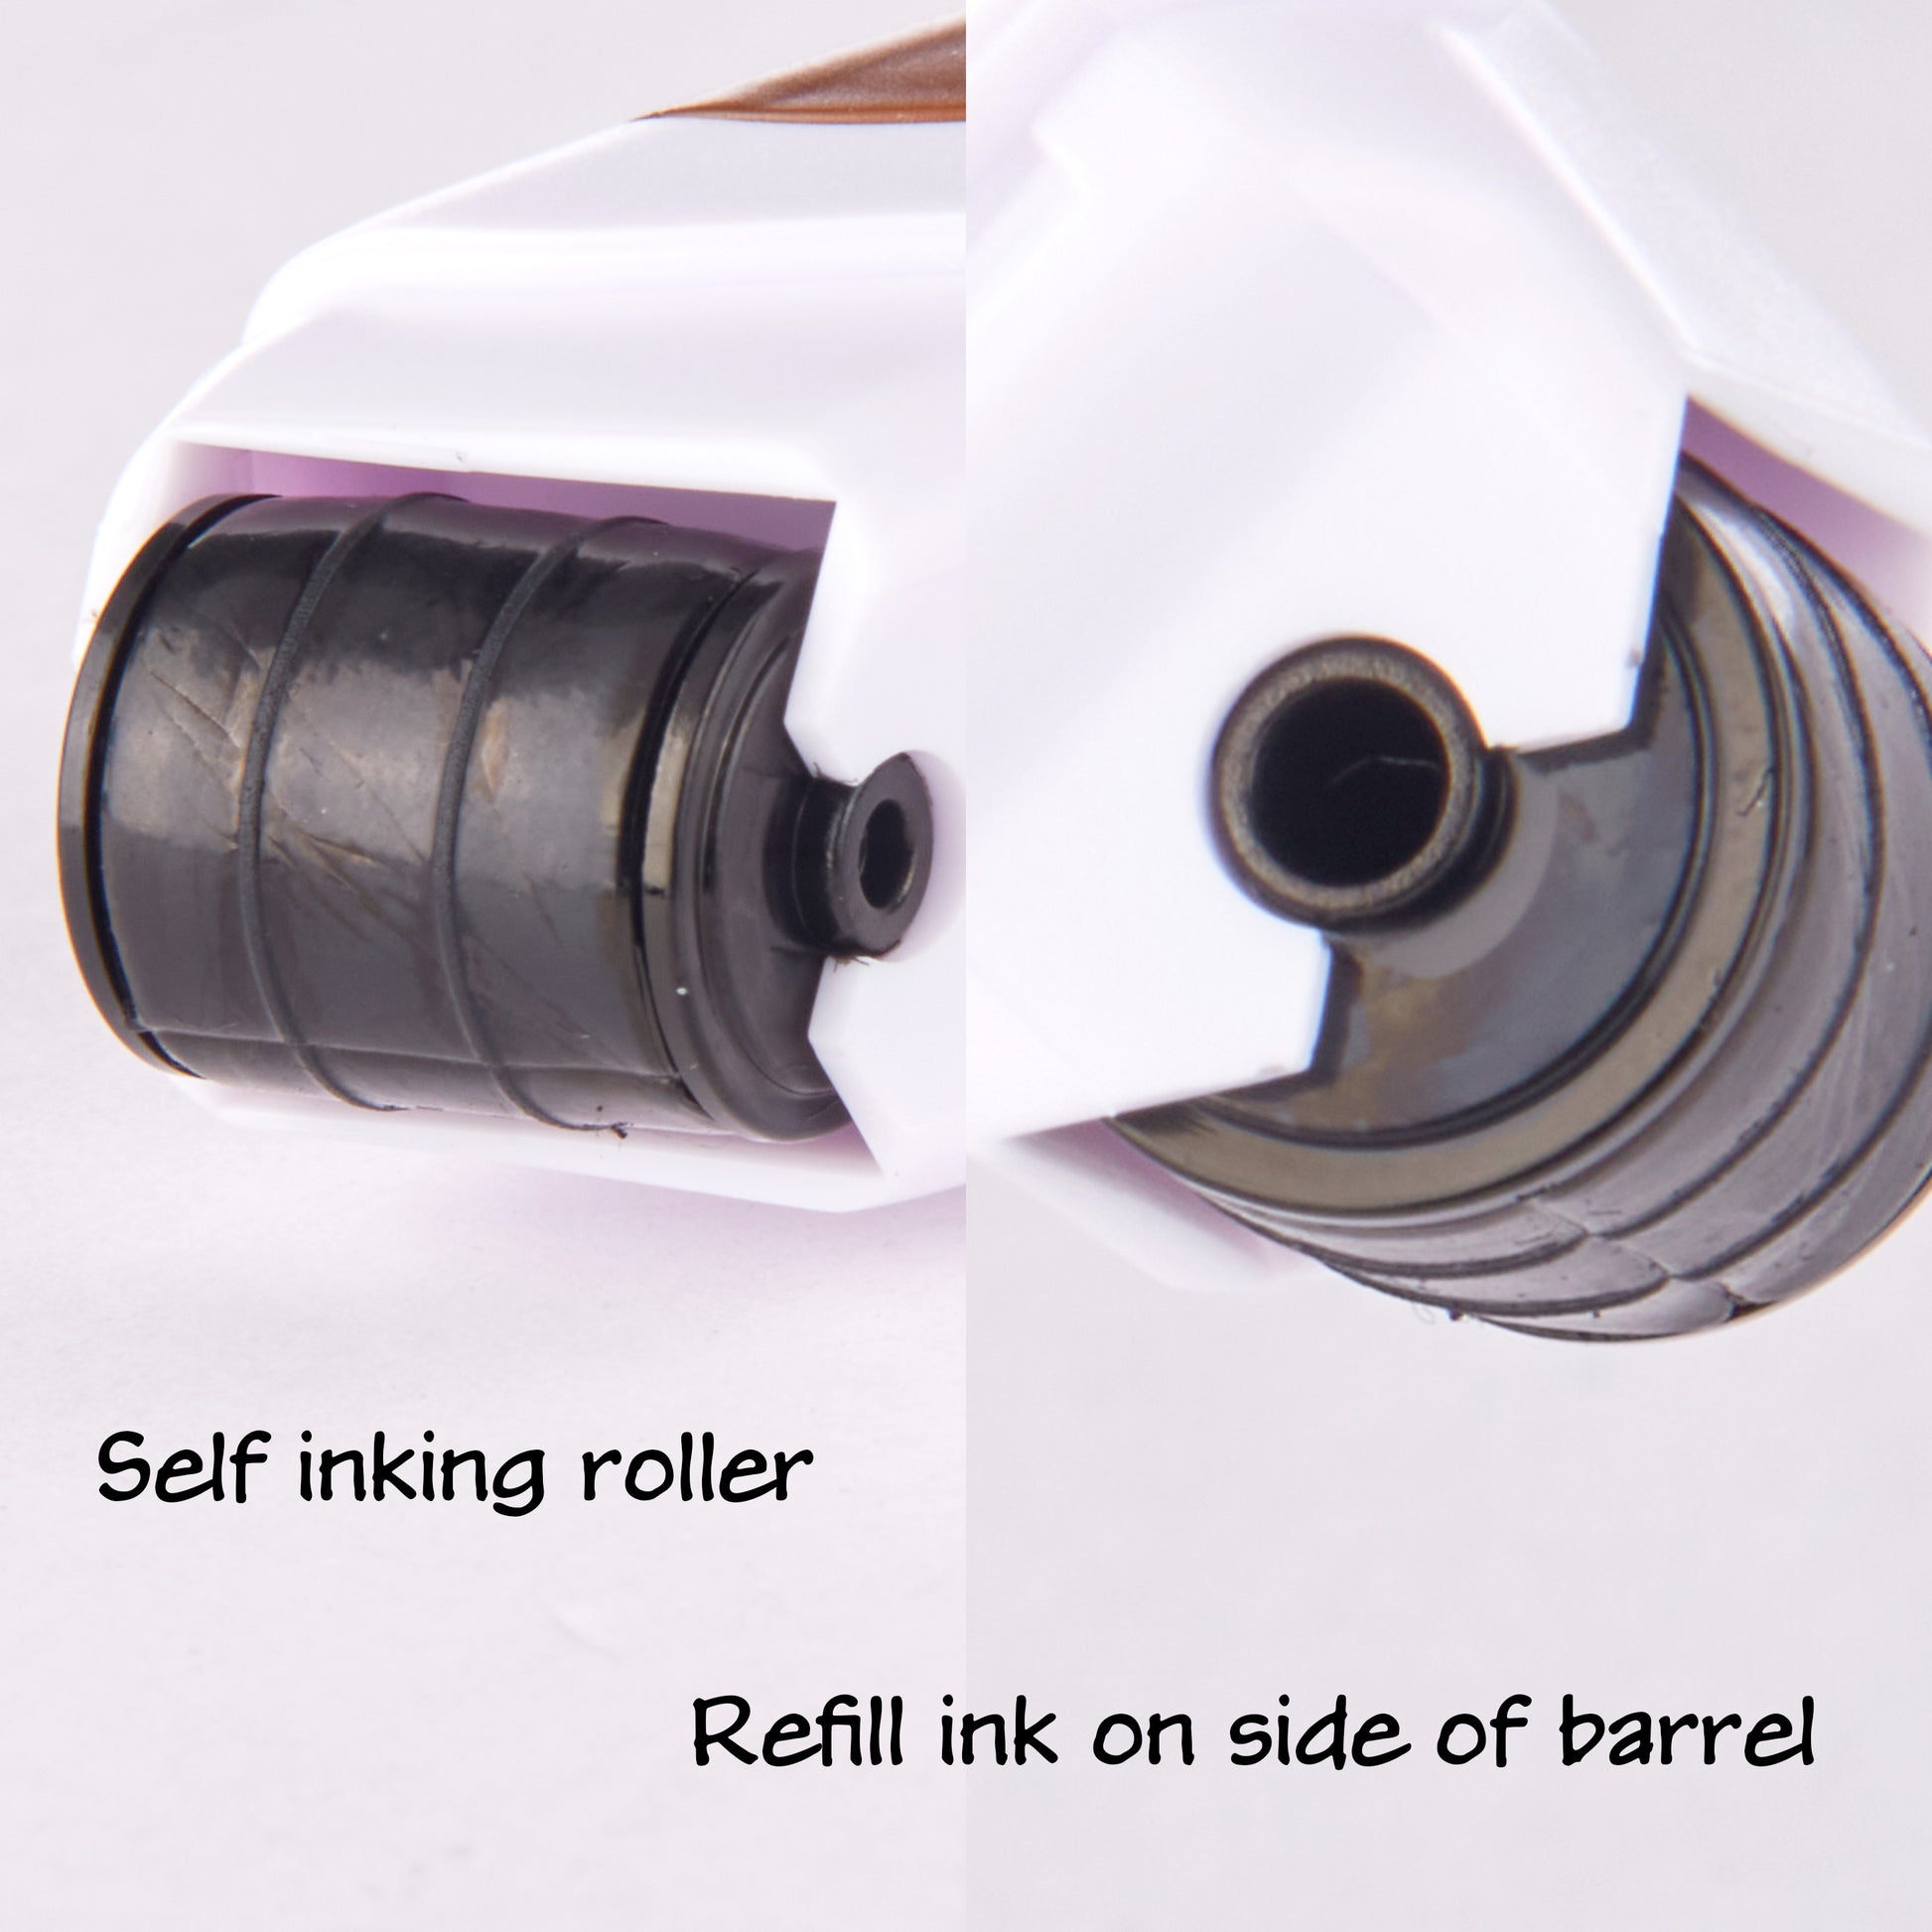 new LEGILINER 3/4” 18mm Handwriting Line Rolling Self-Inking Stamp hand  writing